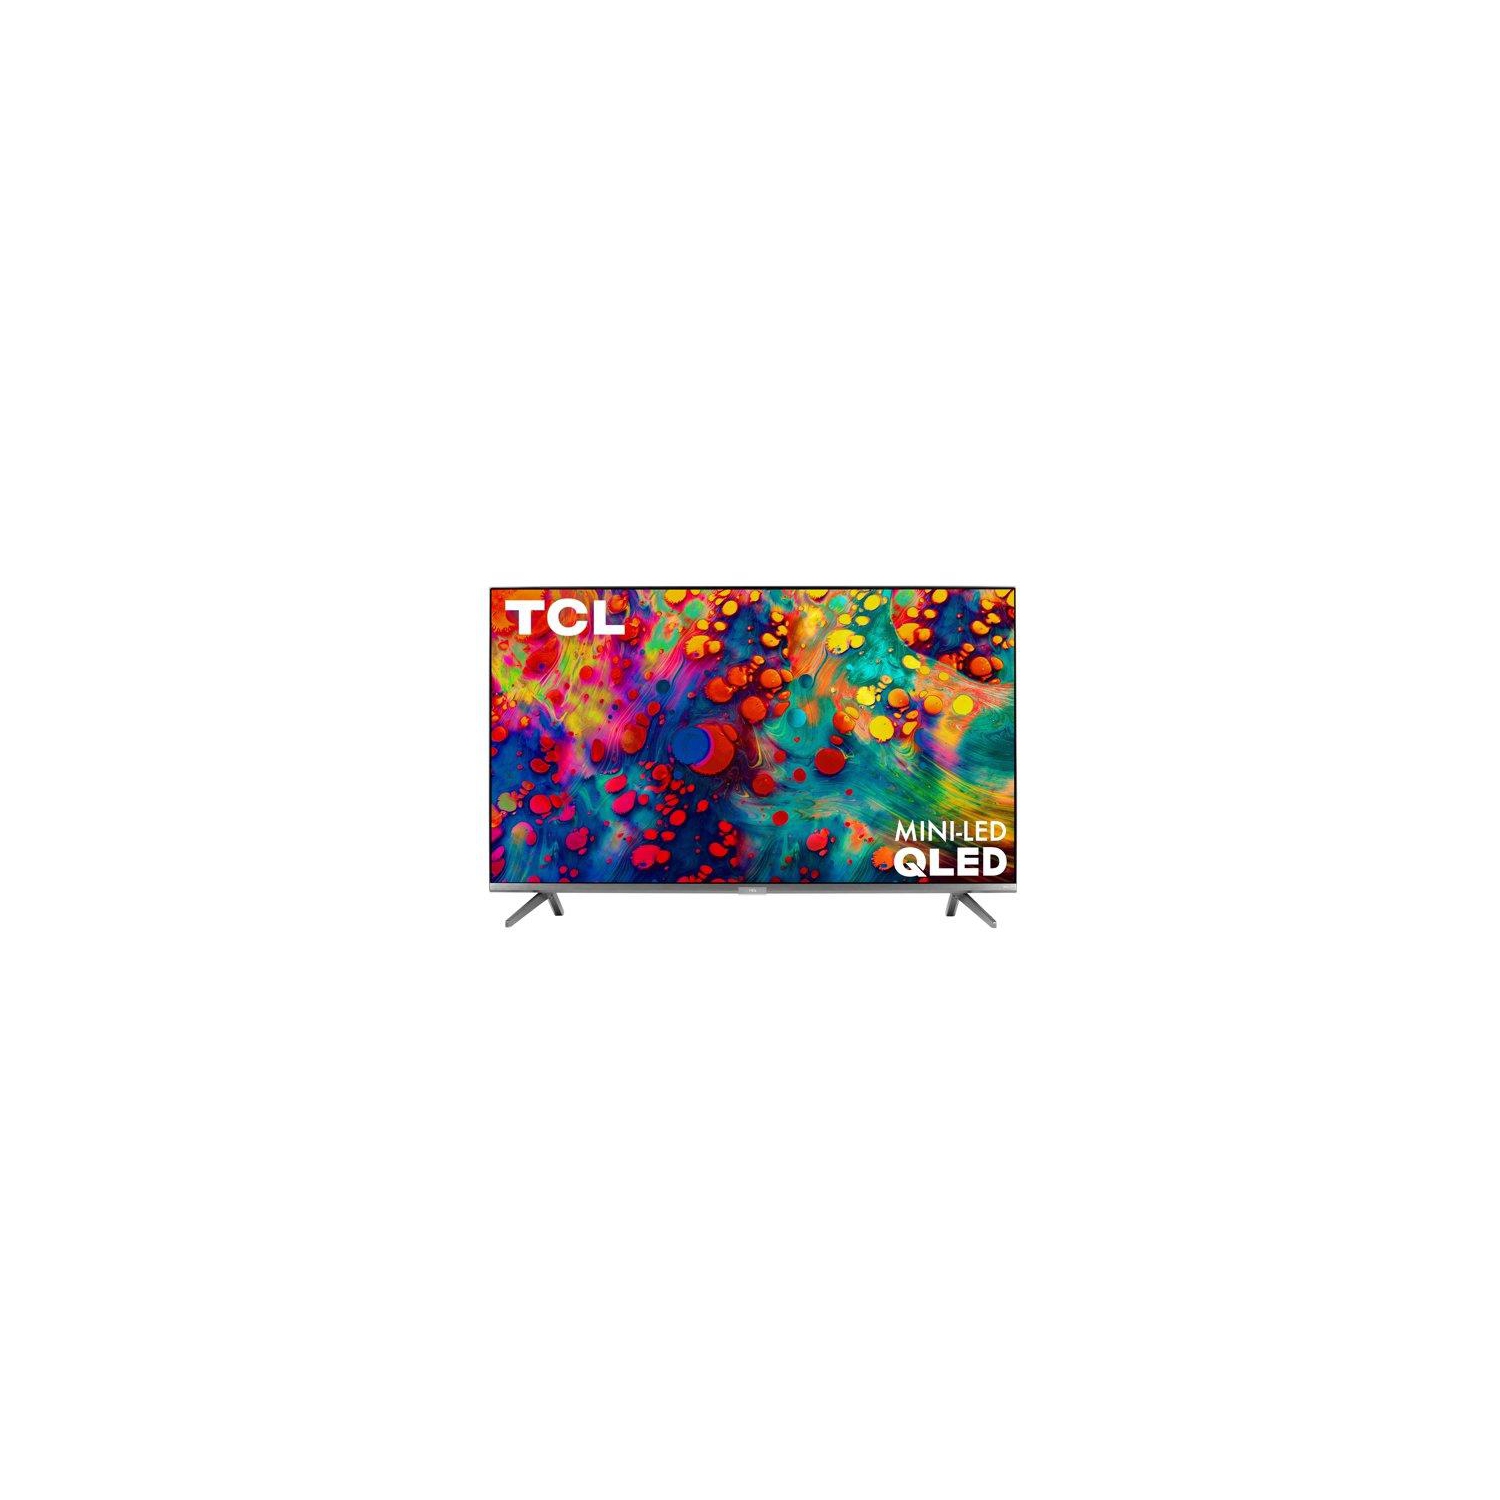 Refurbished (Good) - TCL 55" 6-Series 4K UHD Dolby Vision HDR QLED Roku Smart TV (55R635)